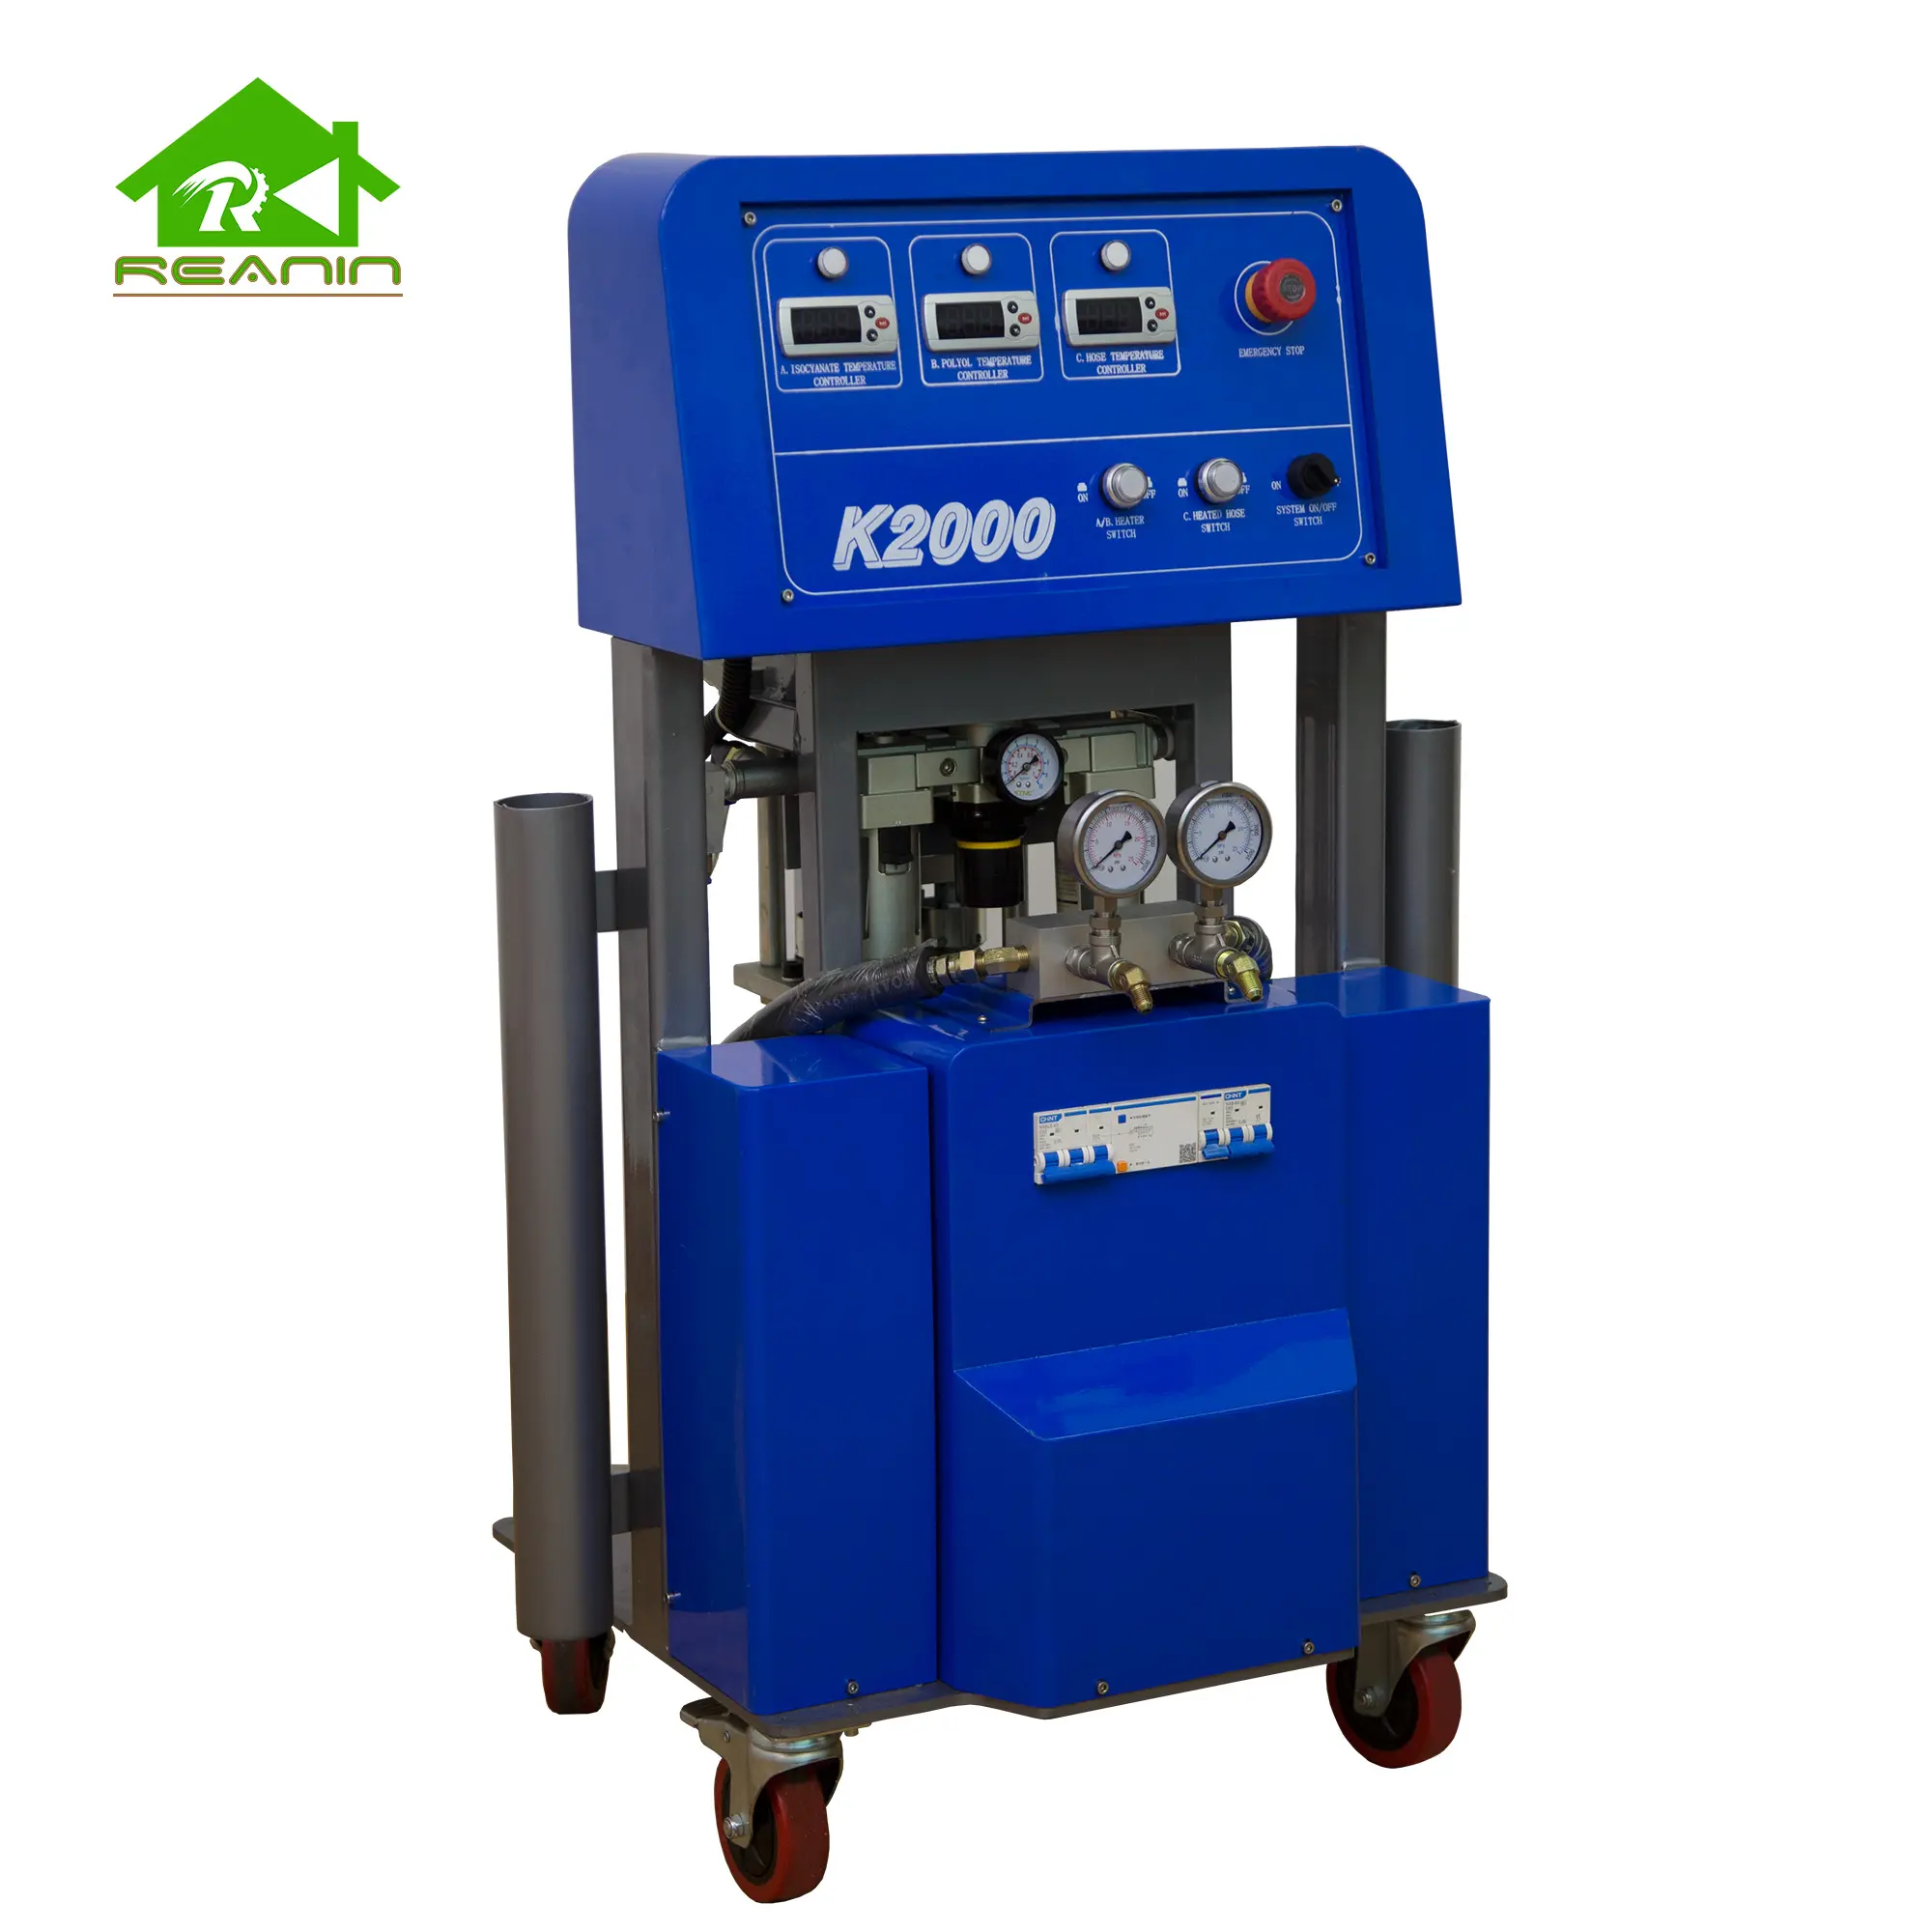 Reanin-K2000 Hot Sale High Pressure Polyurethane Foam Spray Machine For Insulation With Spray Gun And Heating Hoses